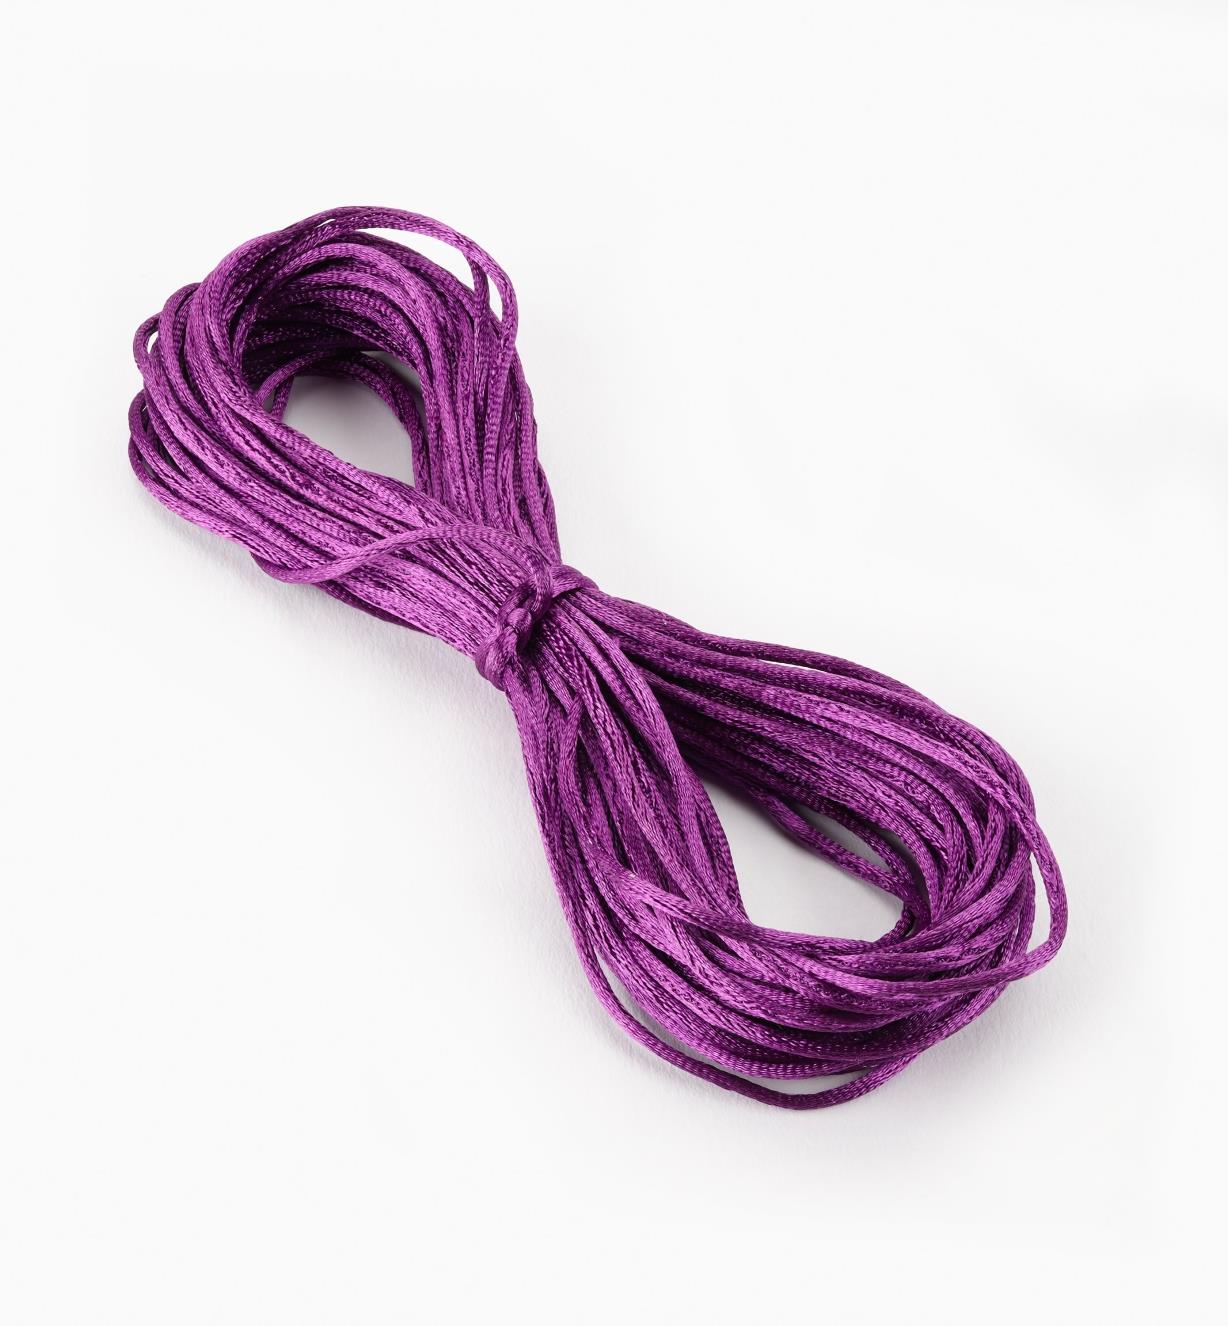 09A0712 - Royal Purple Rattail Cord